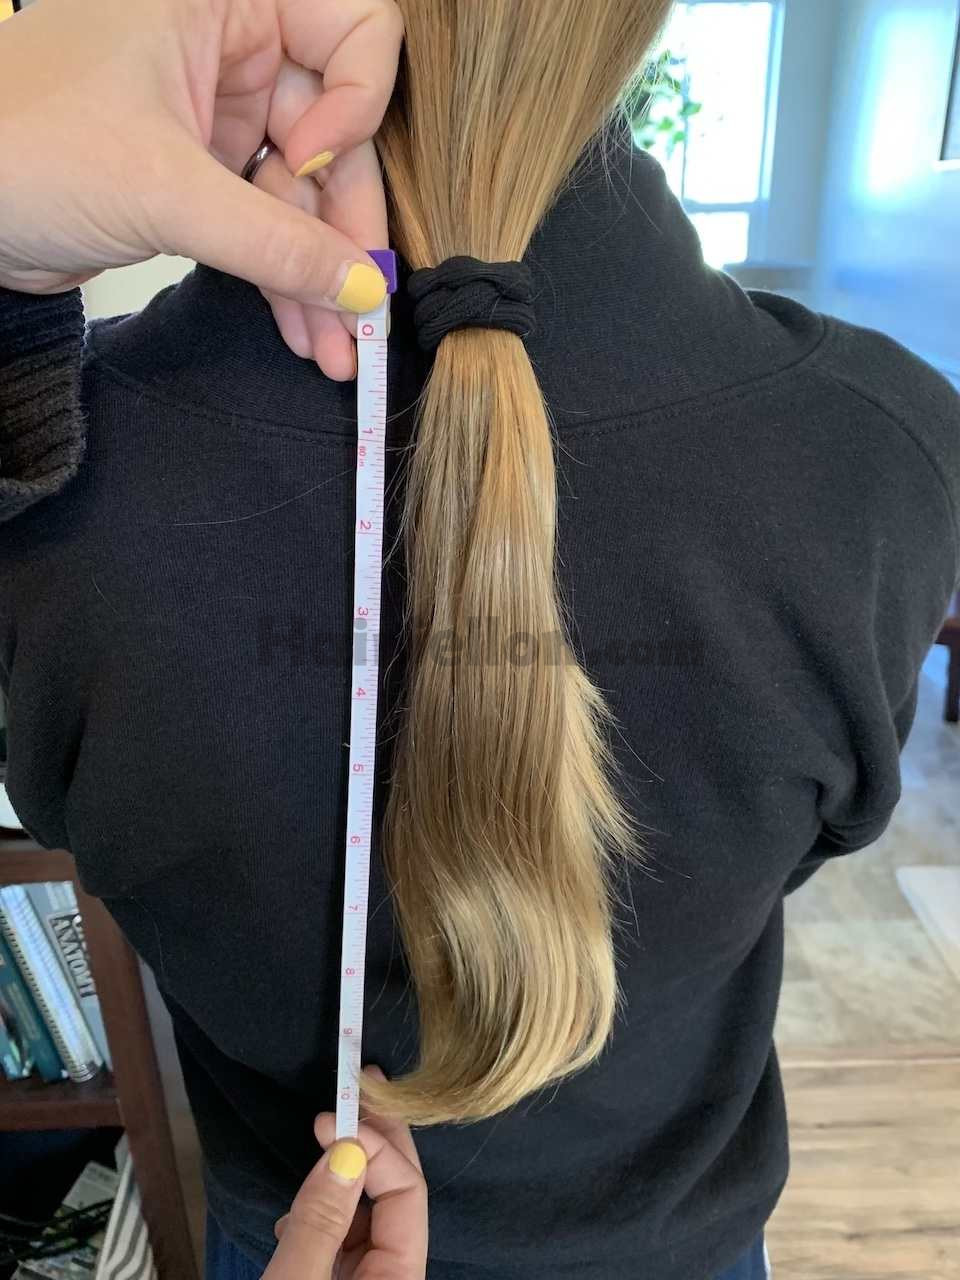 10" ponytail length